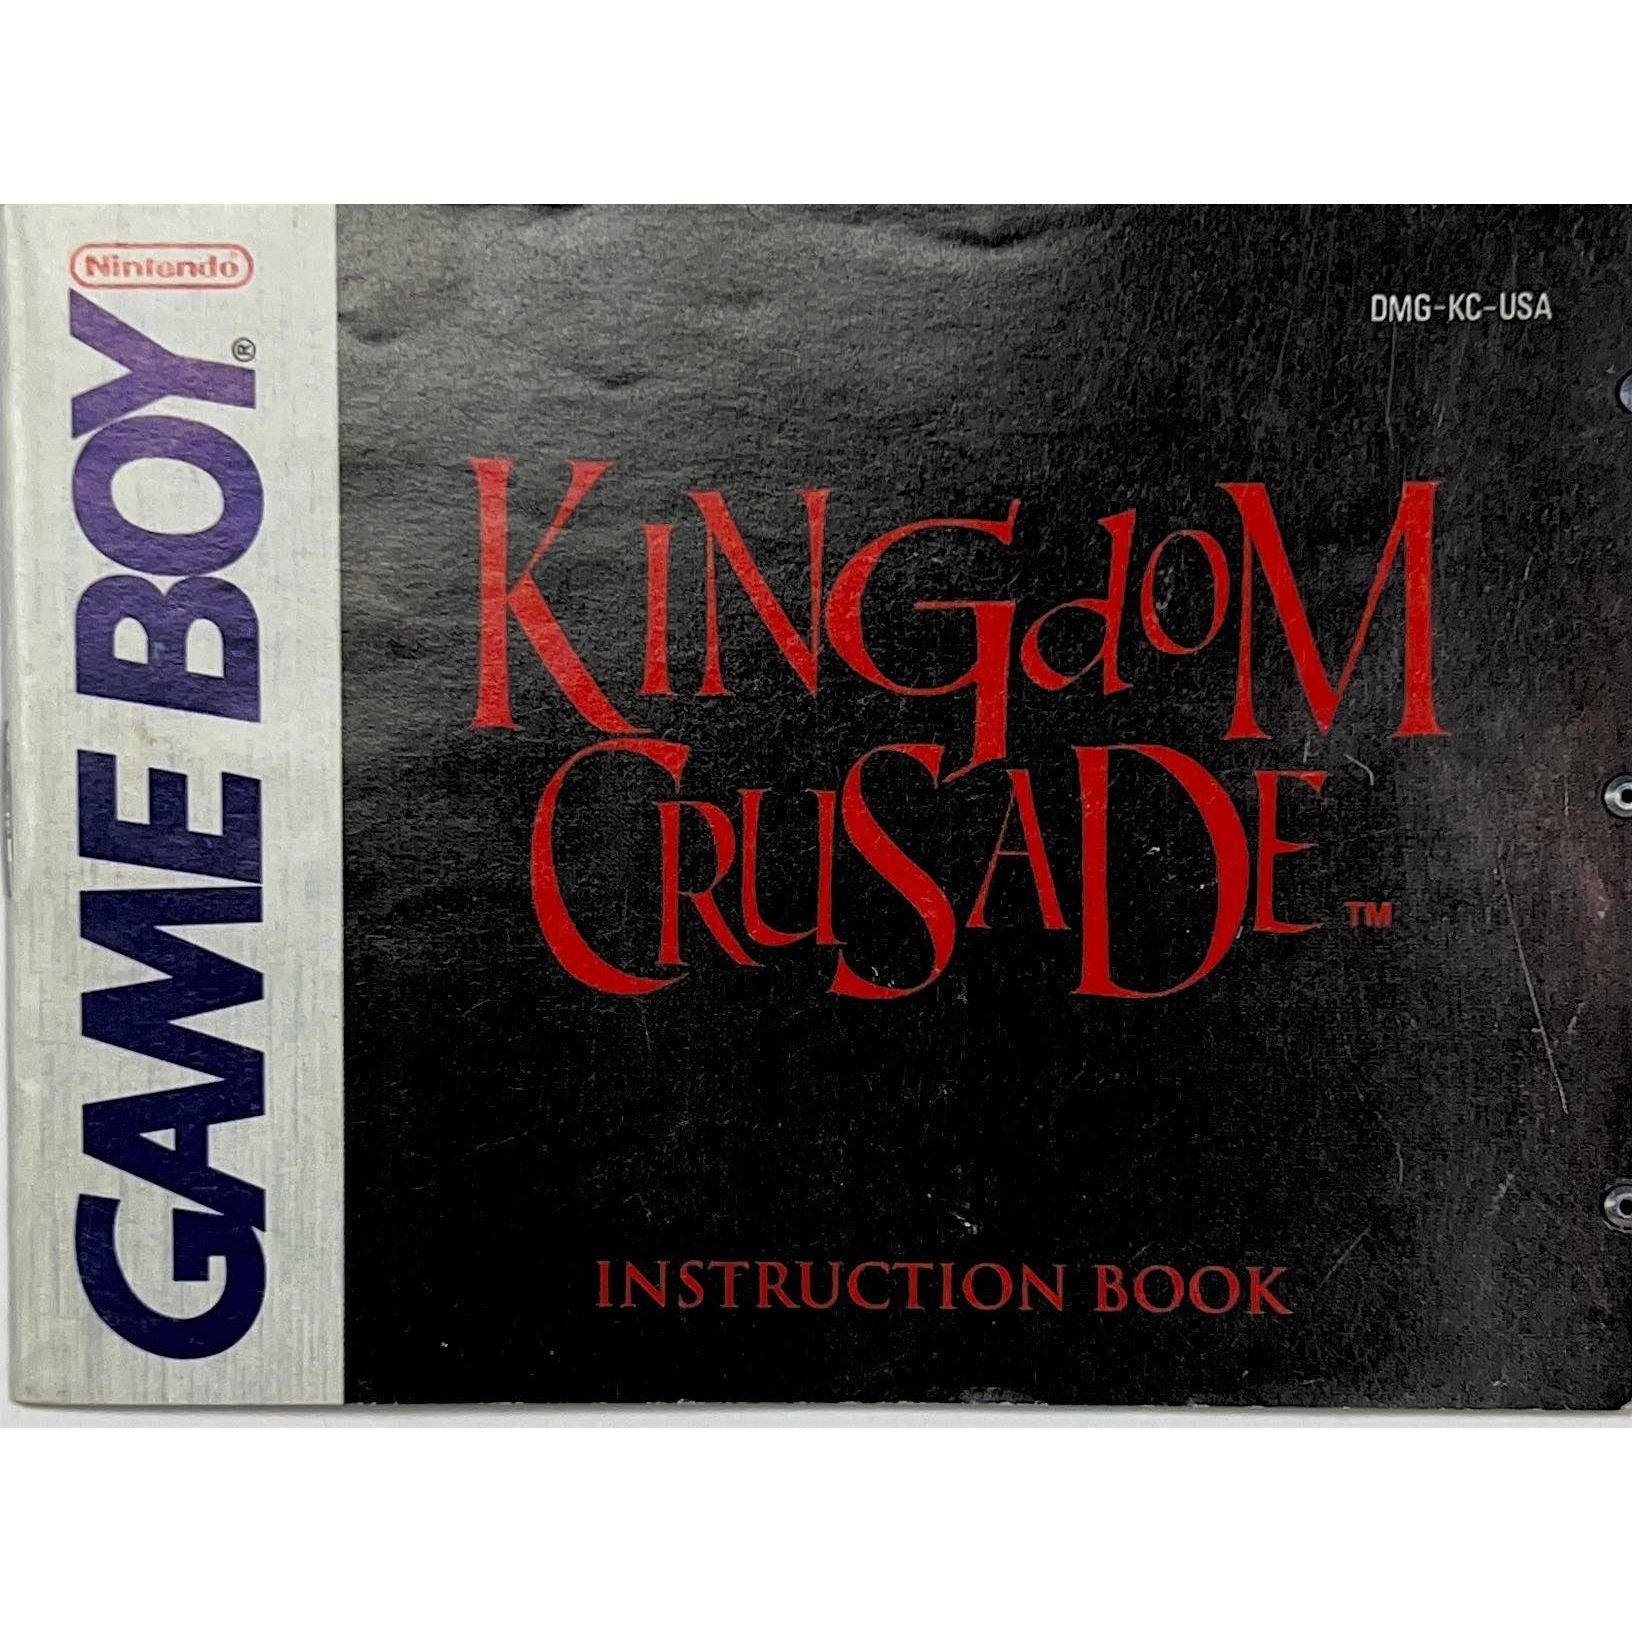 GB - Kingdom Crusade (Manual)